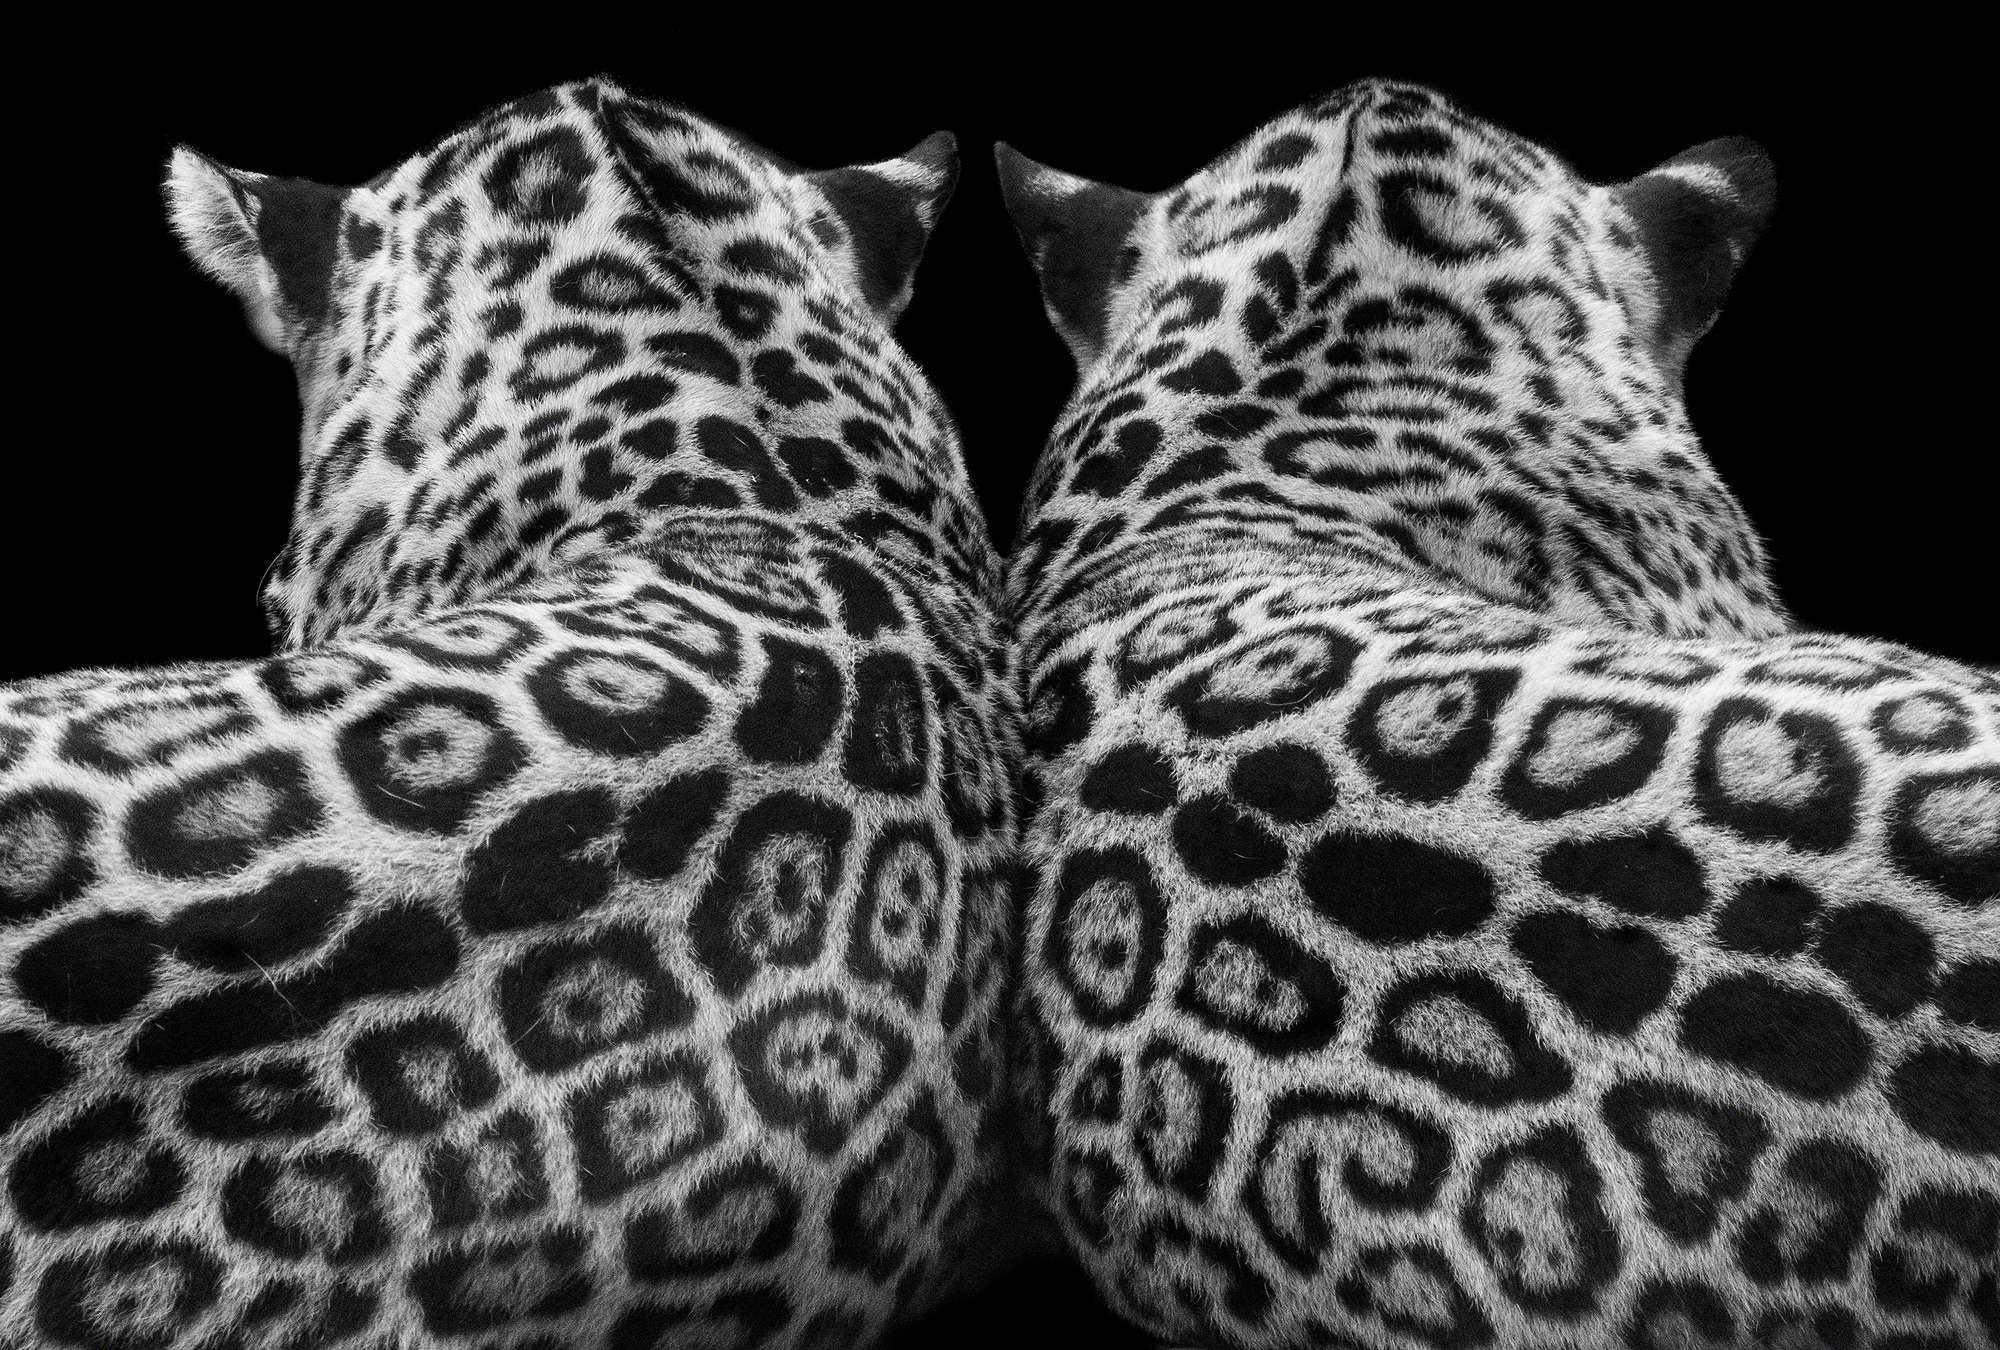             Photo wallpaper leopard couple against black background
        